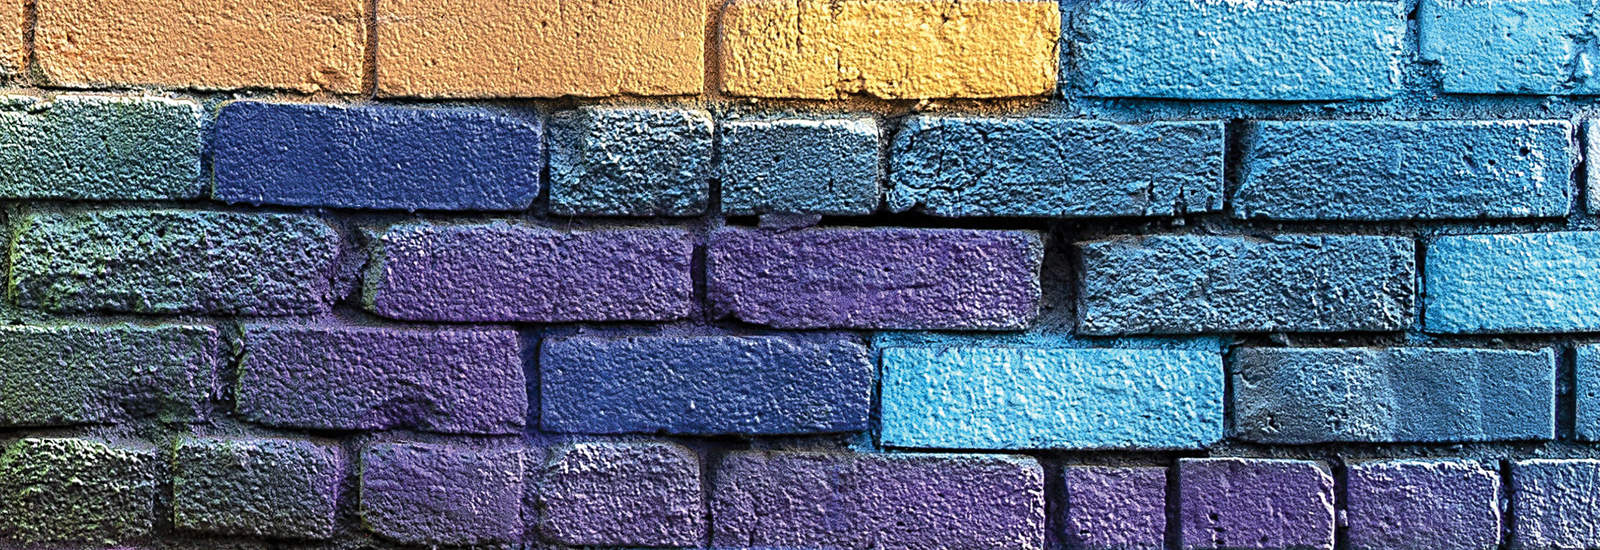 Photograph of painted bricks